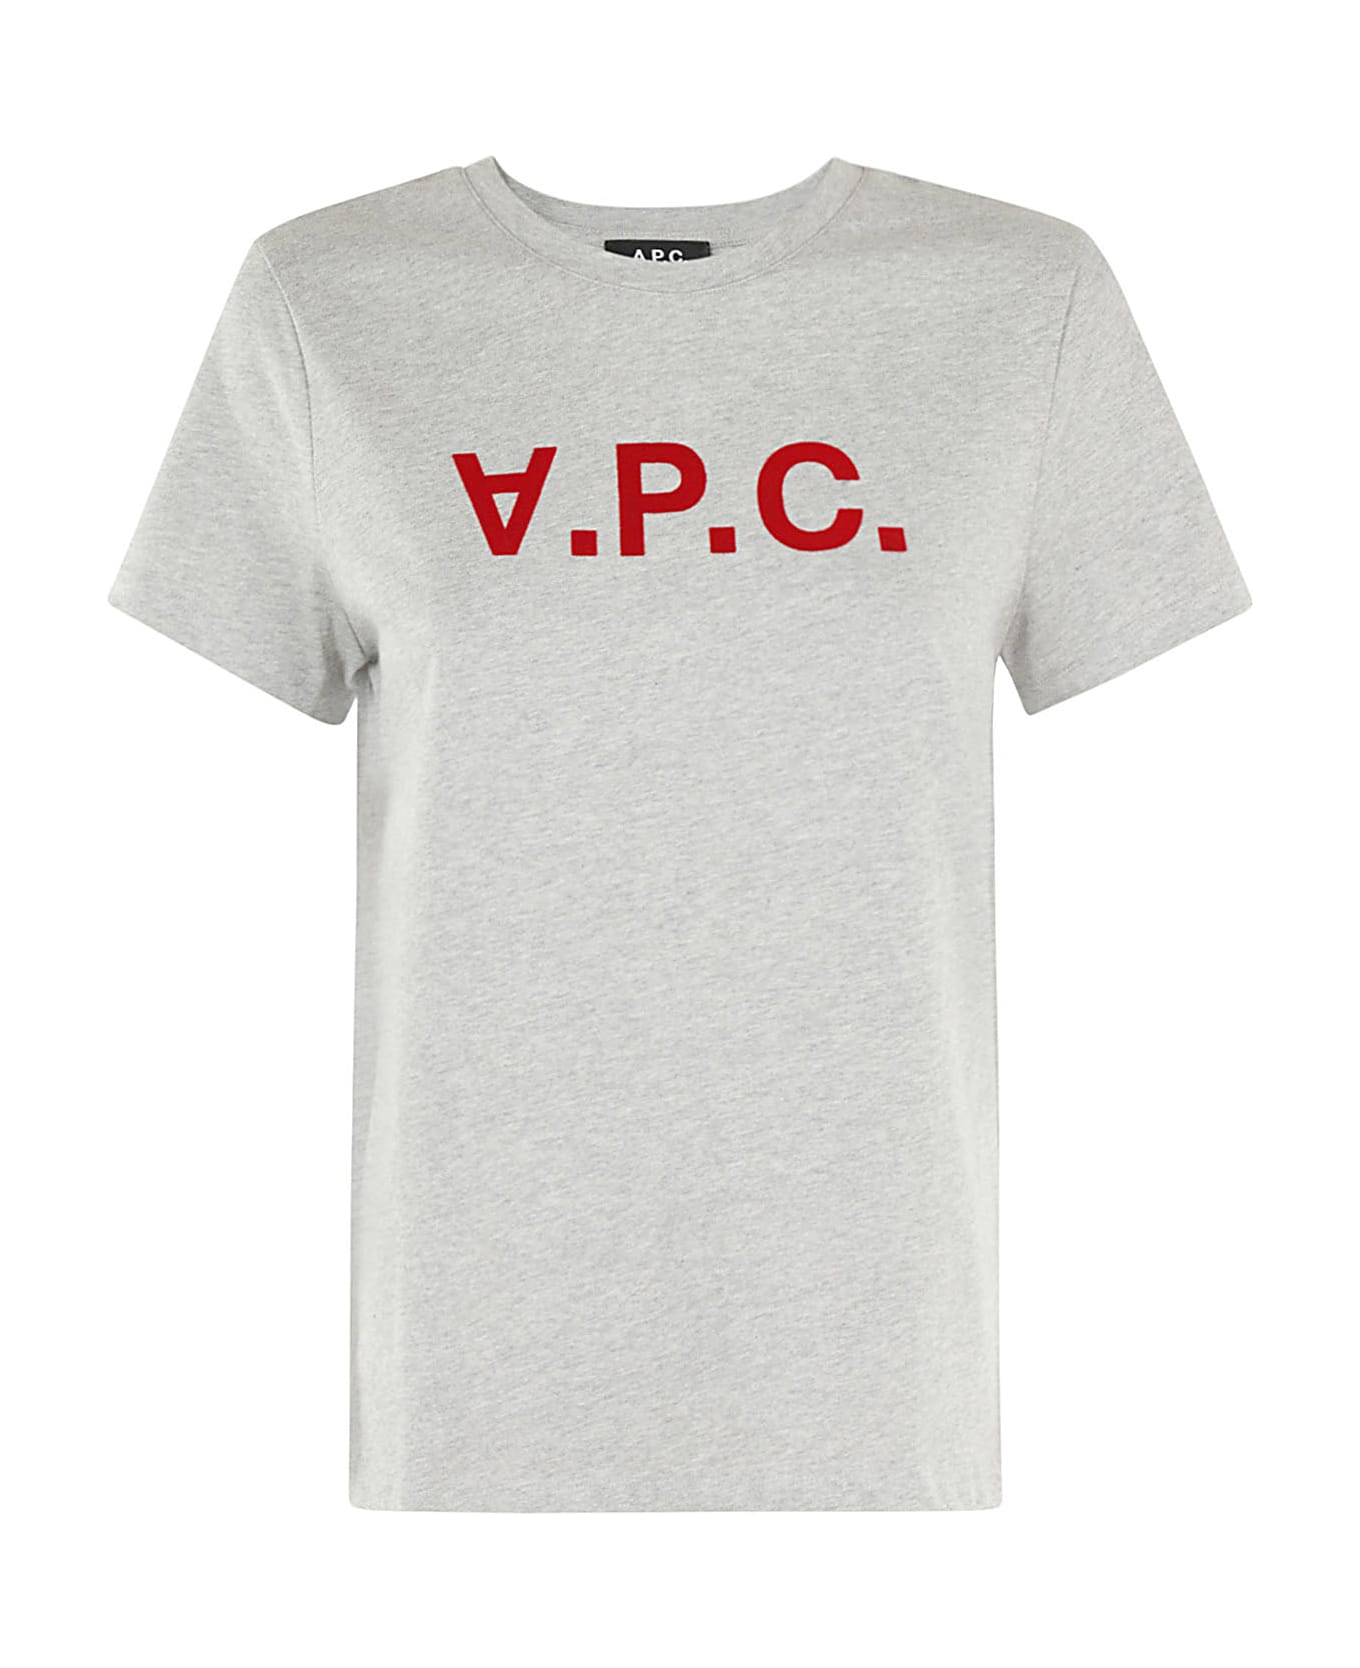 A.P.C. T-shirt - Gris Clair Chine Rouge Tシャツ